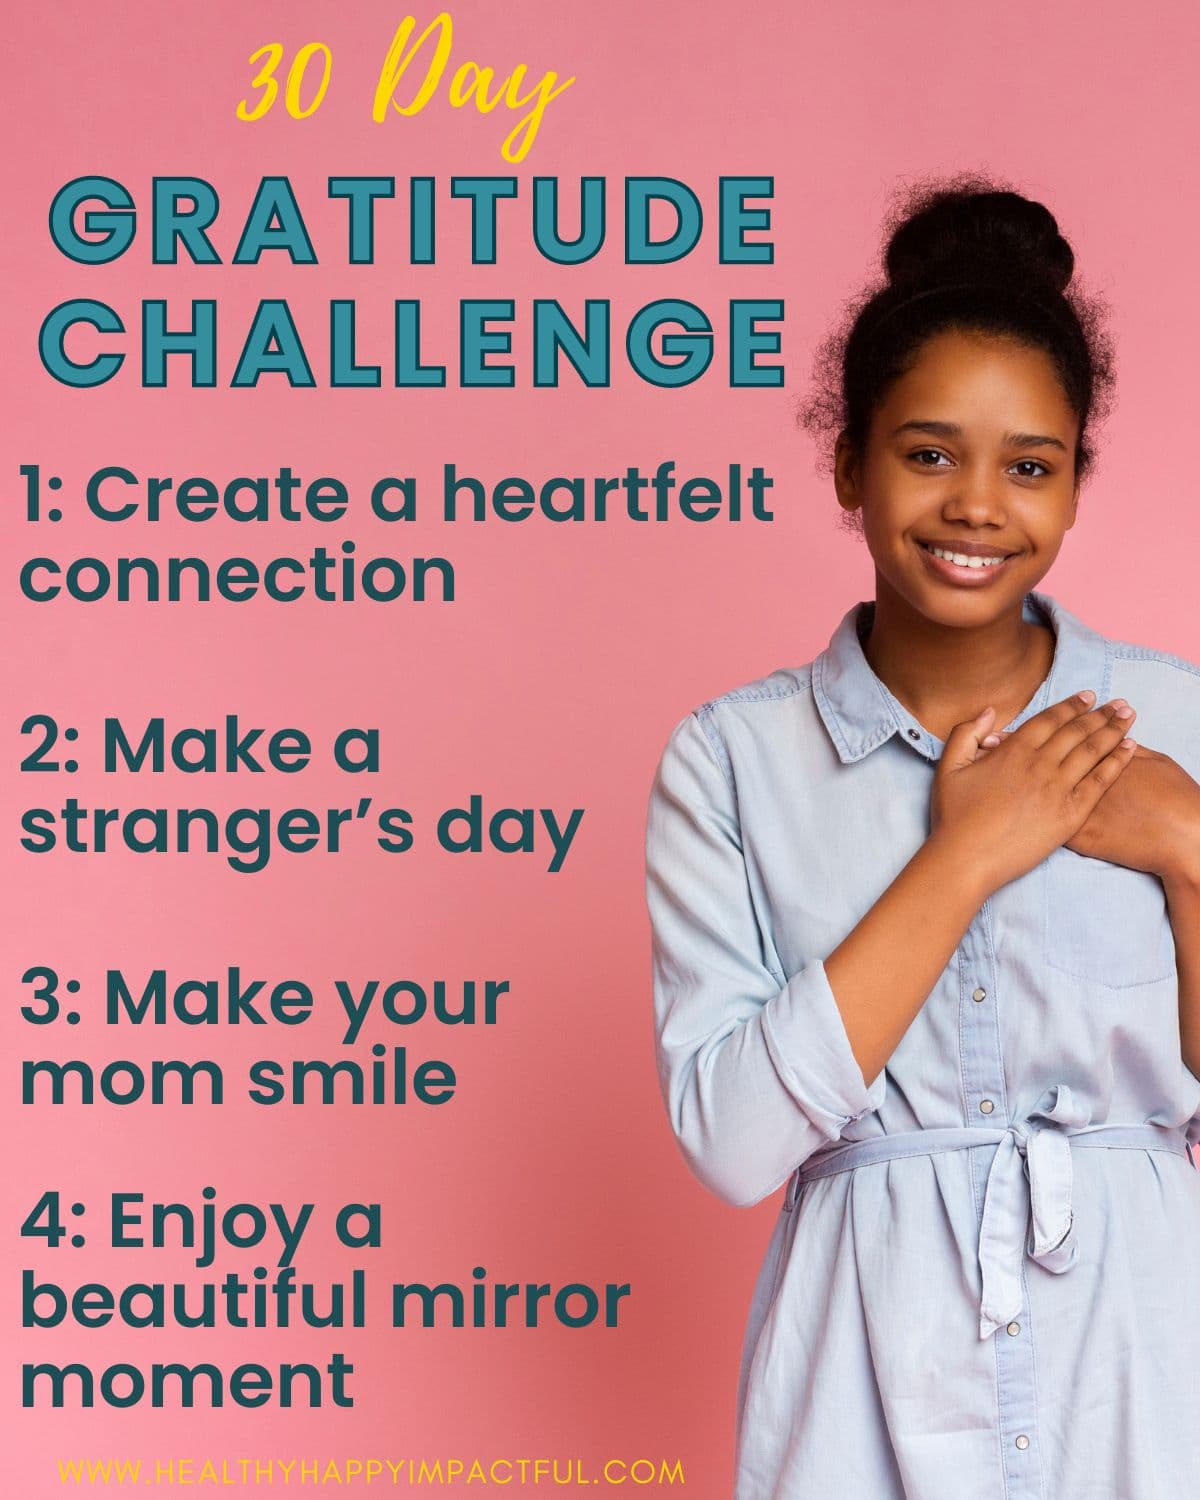 30 days of gratitude pdf journal challenge and ideas list